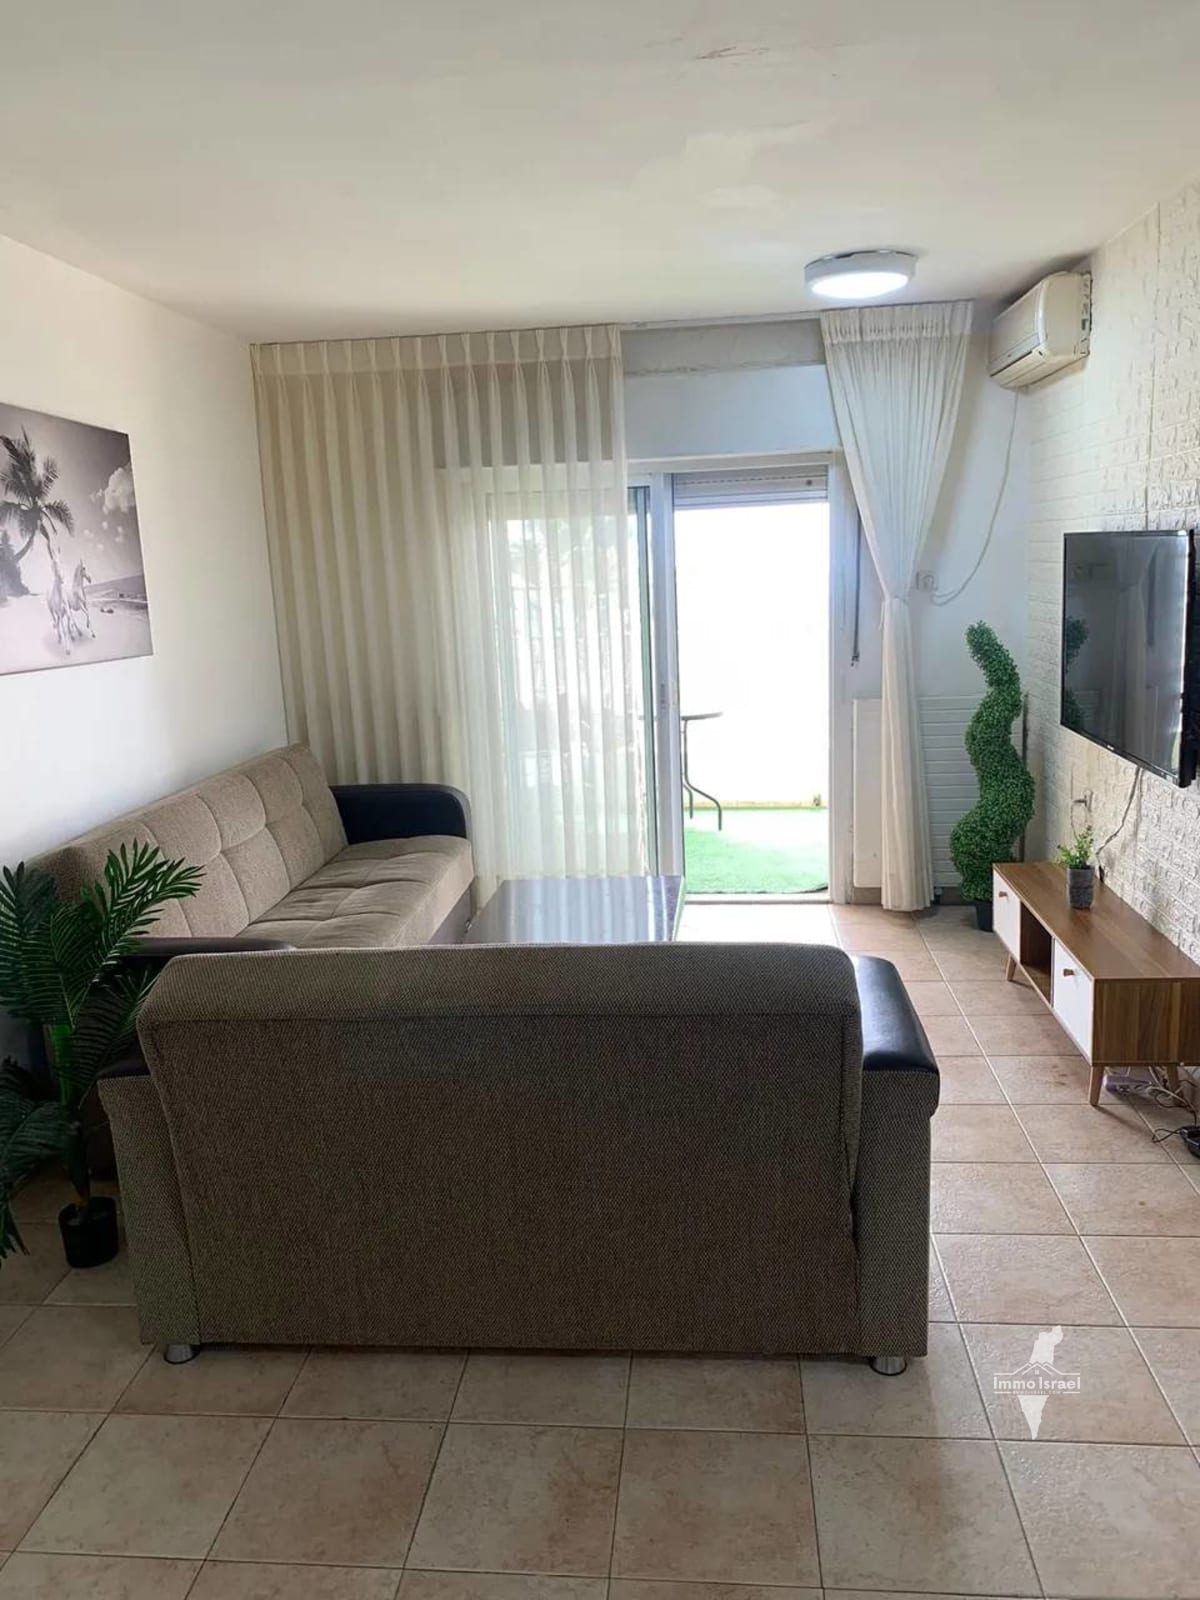 For Sale: 4-Room Apartment in Gila, Jerusalem